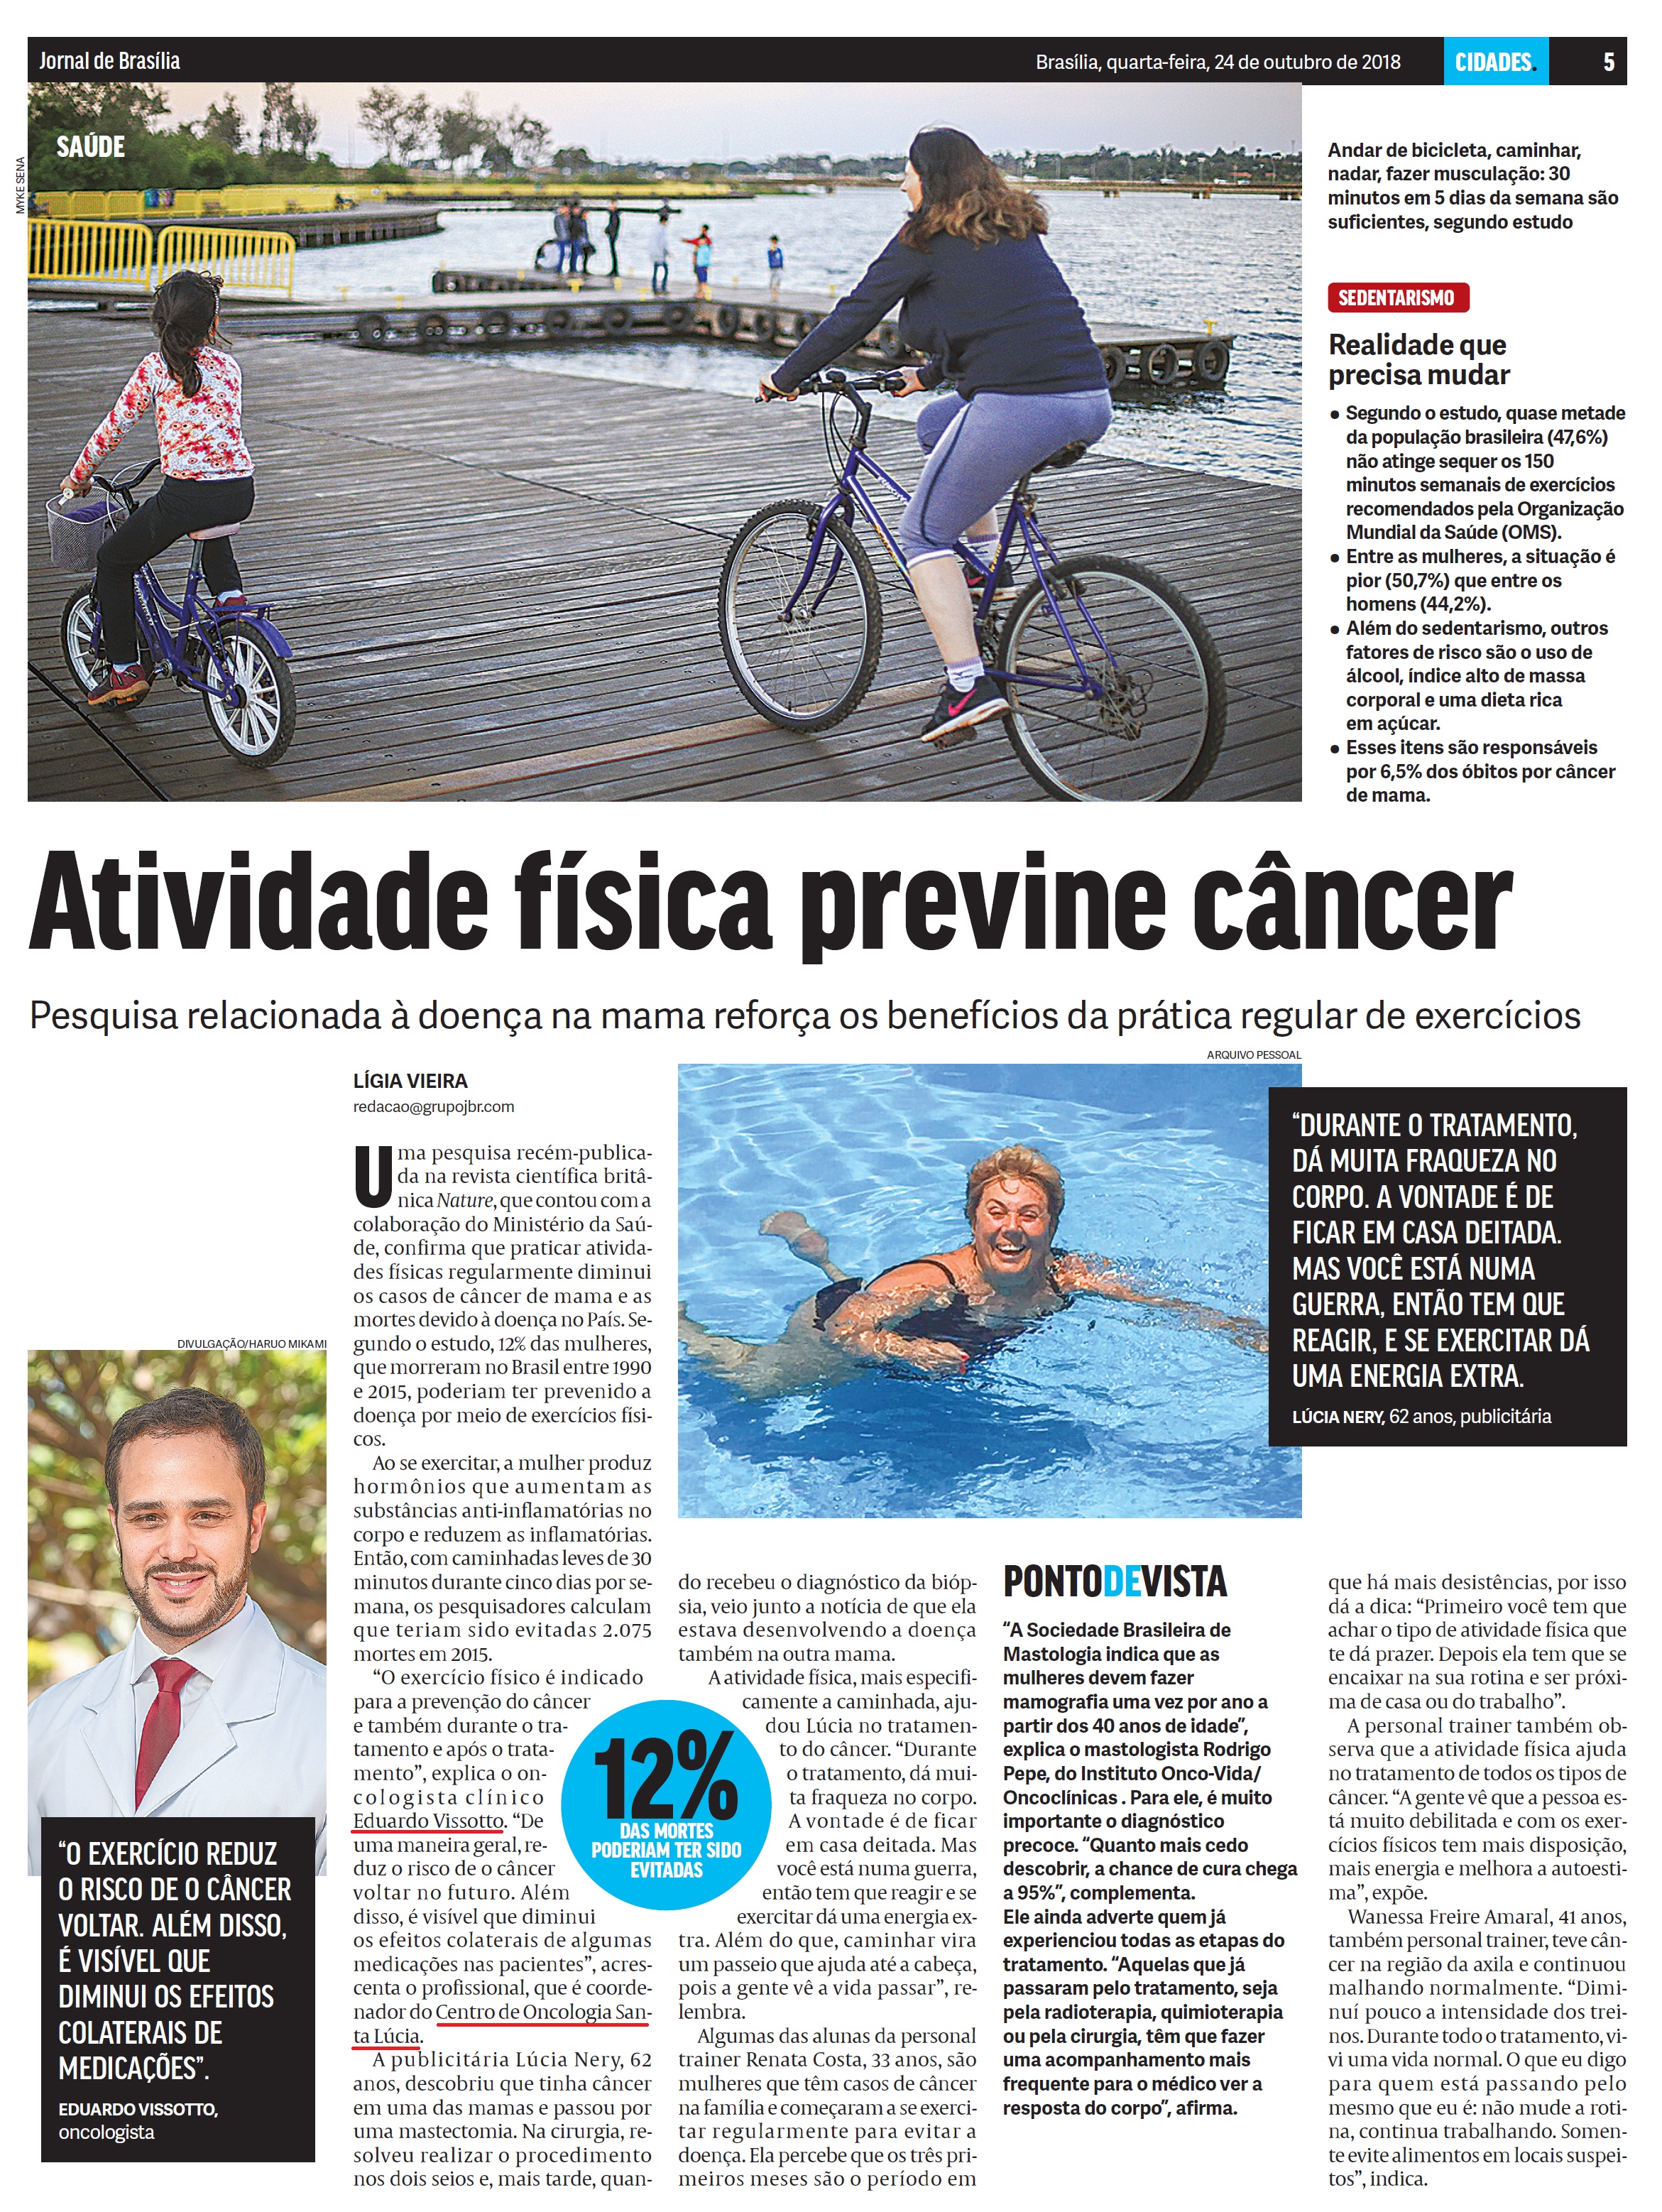 Jornal de Brasília - Dr. Eduardo Vissotto HSLS - 24-10-2018